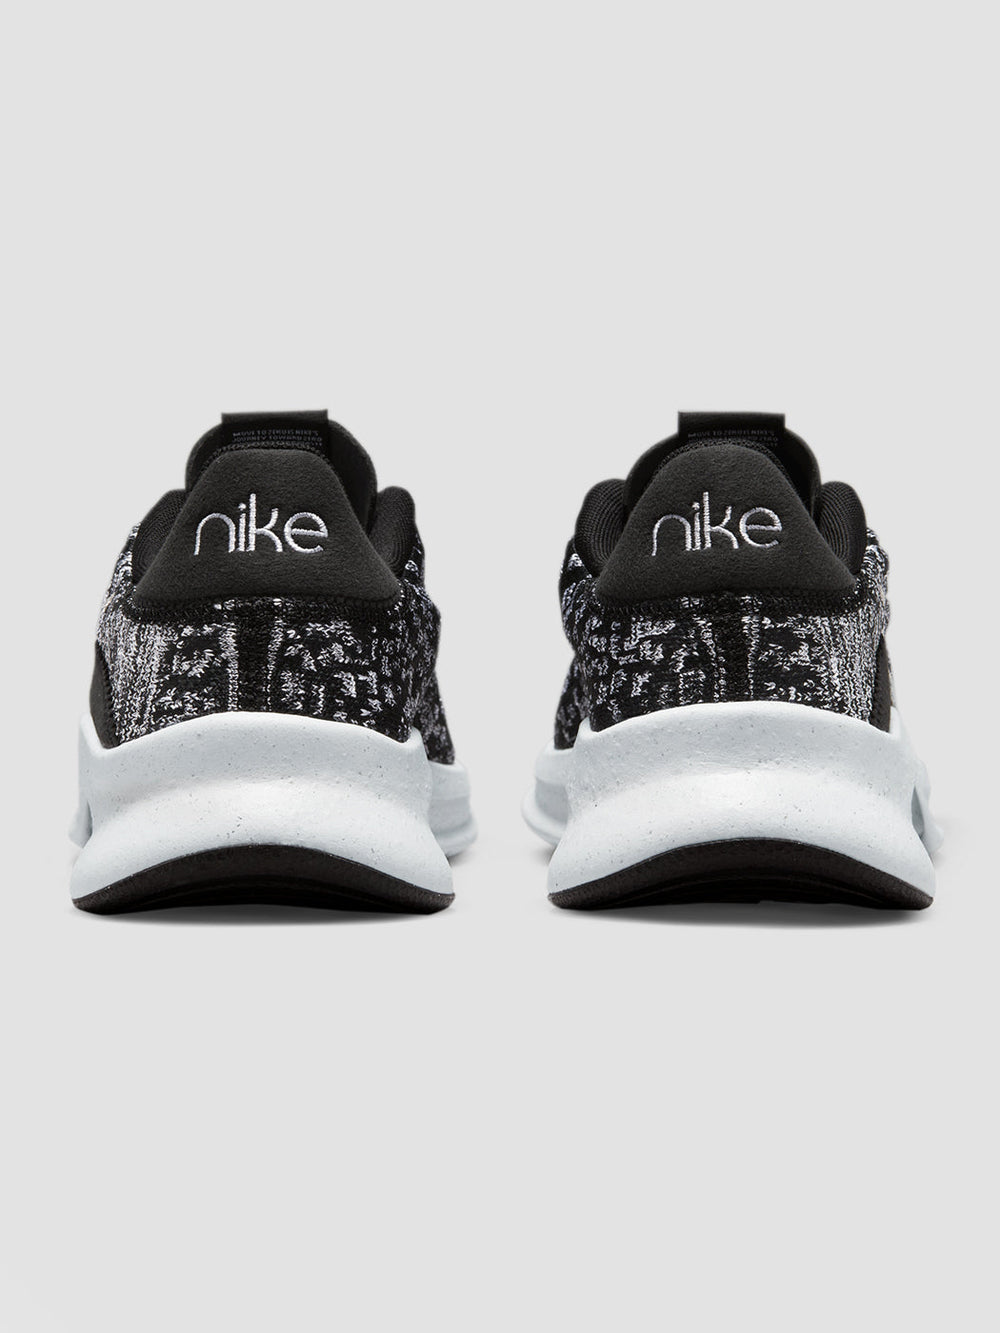 Nike Flyknit High Support Sports Bra Womens Black/Grey, £8.00